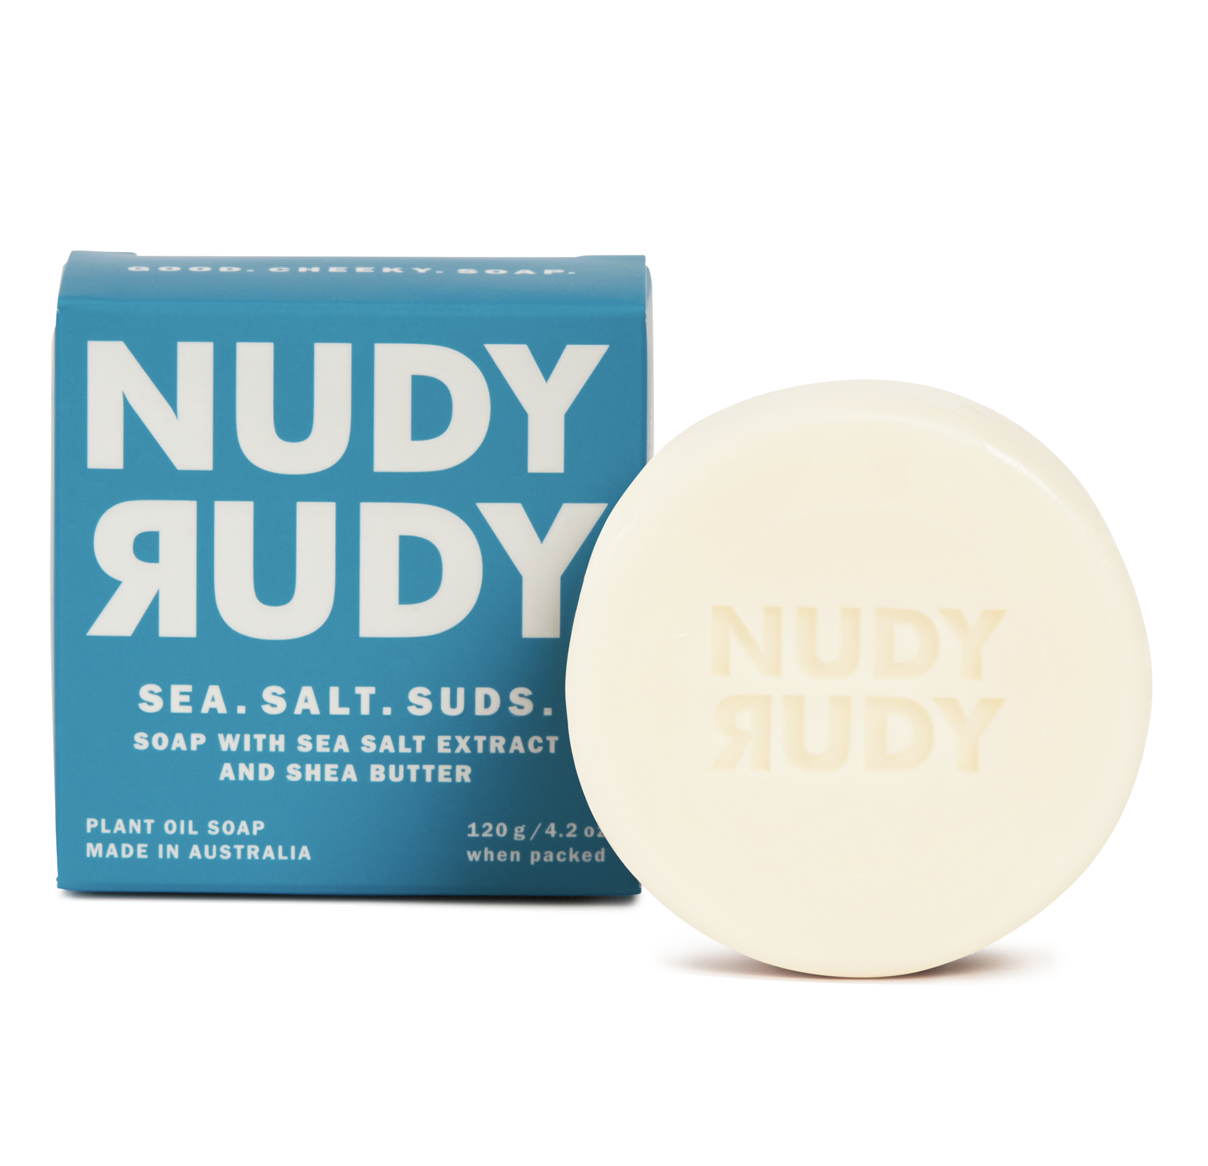 Sea. Salt. Suds. Bar Soap Puck - 1 Month